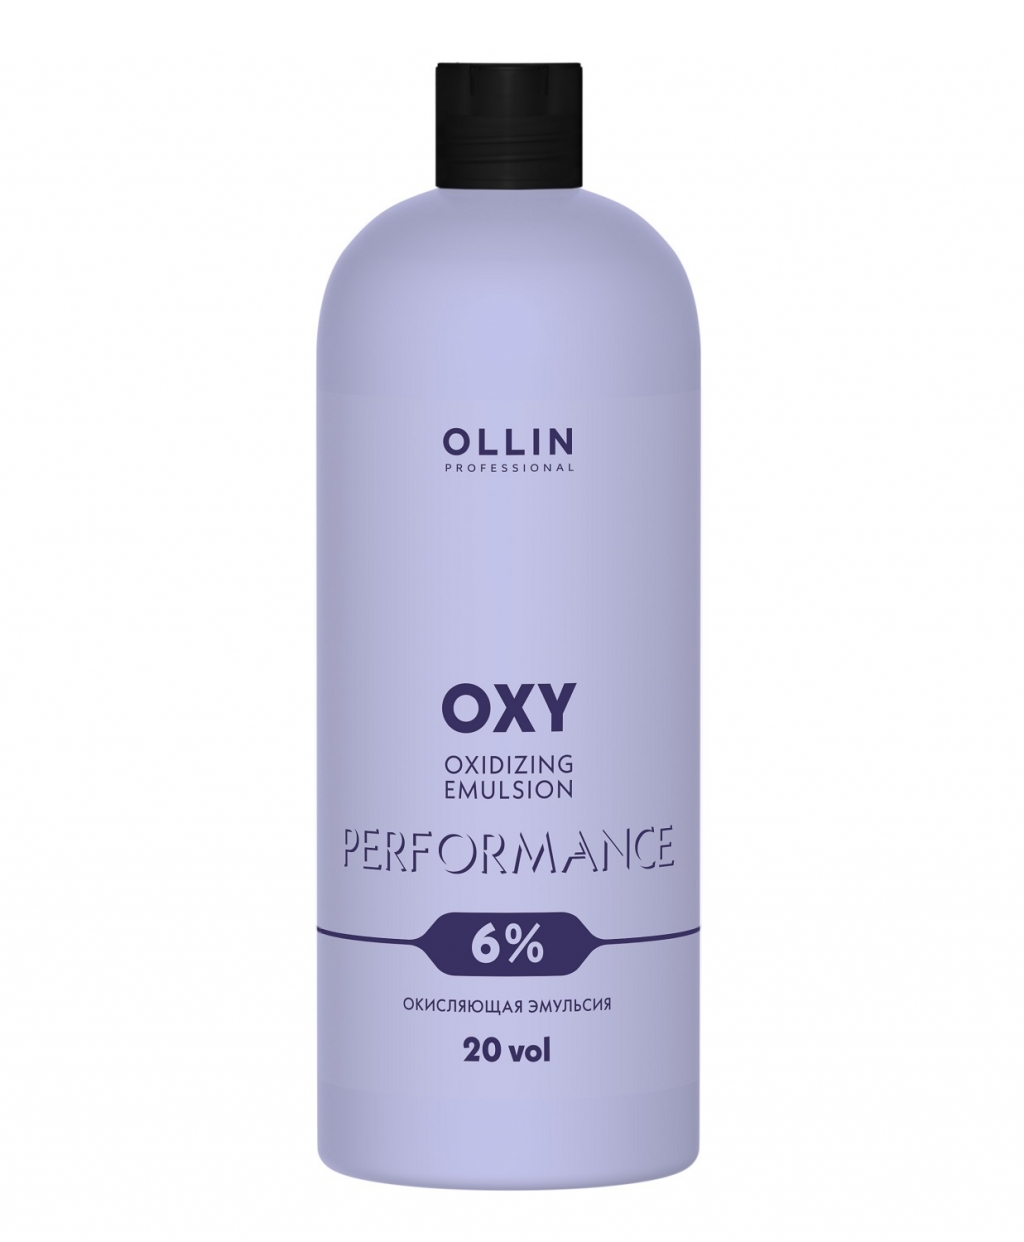 Ollin Professional Окисляющая эмульсия performance OXY 6% 20vol., 1000 мл (Ollin Professional, Окрашивание волос)